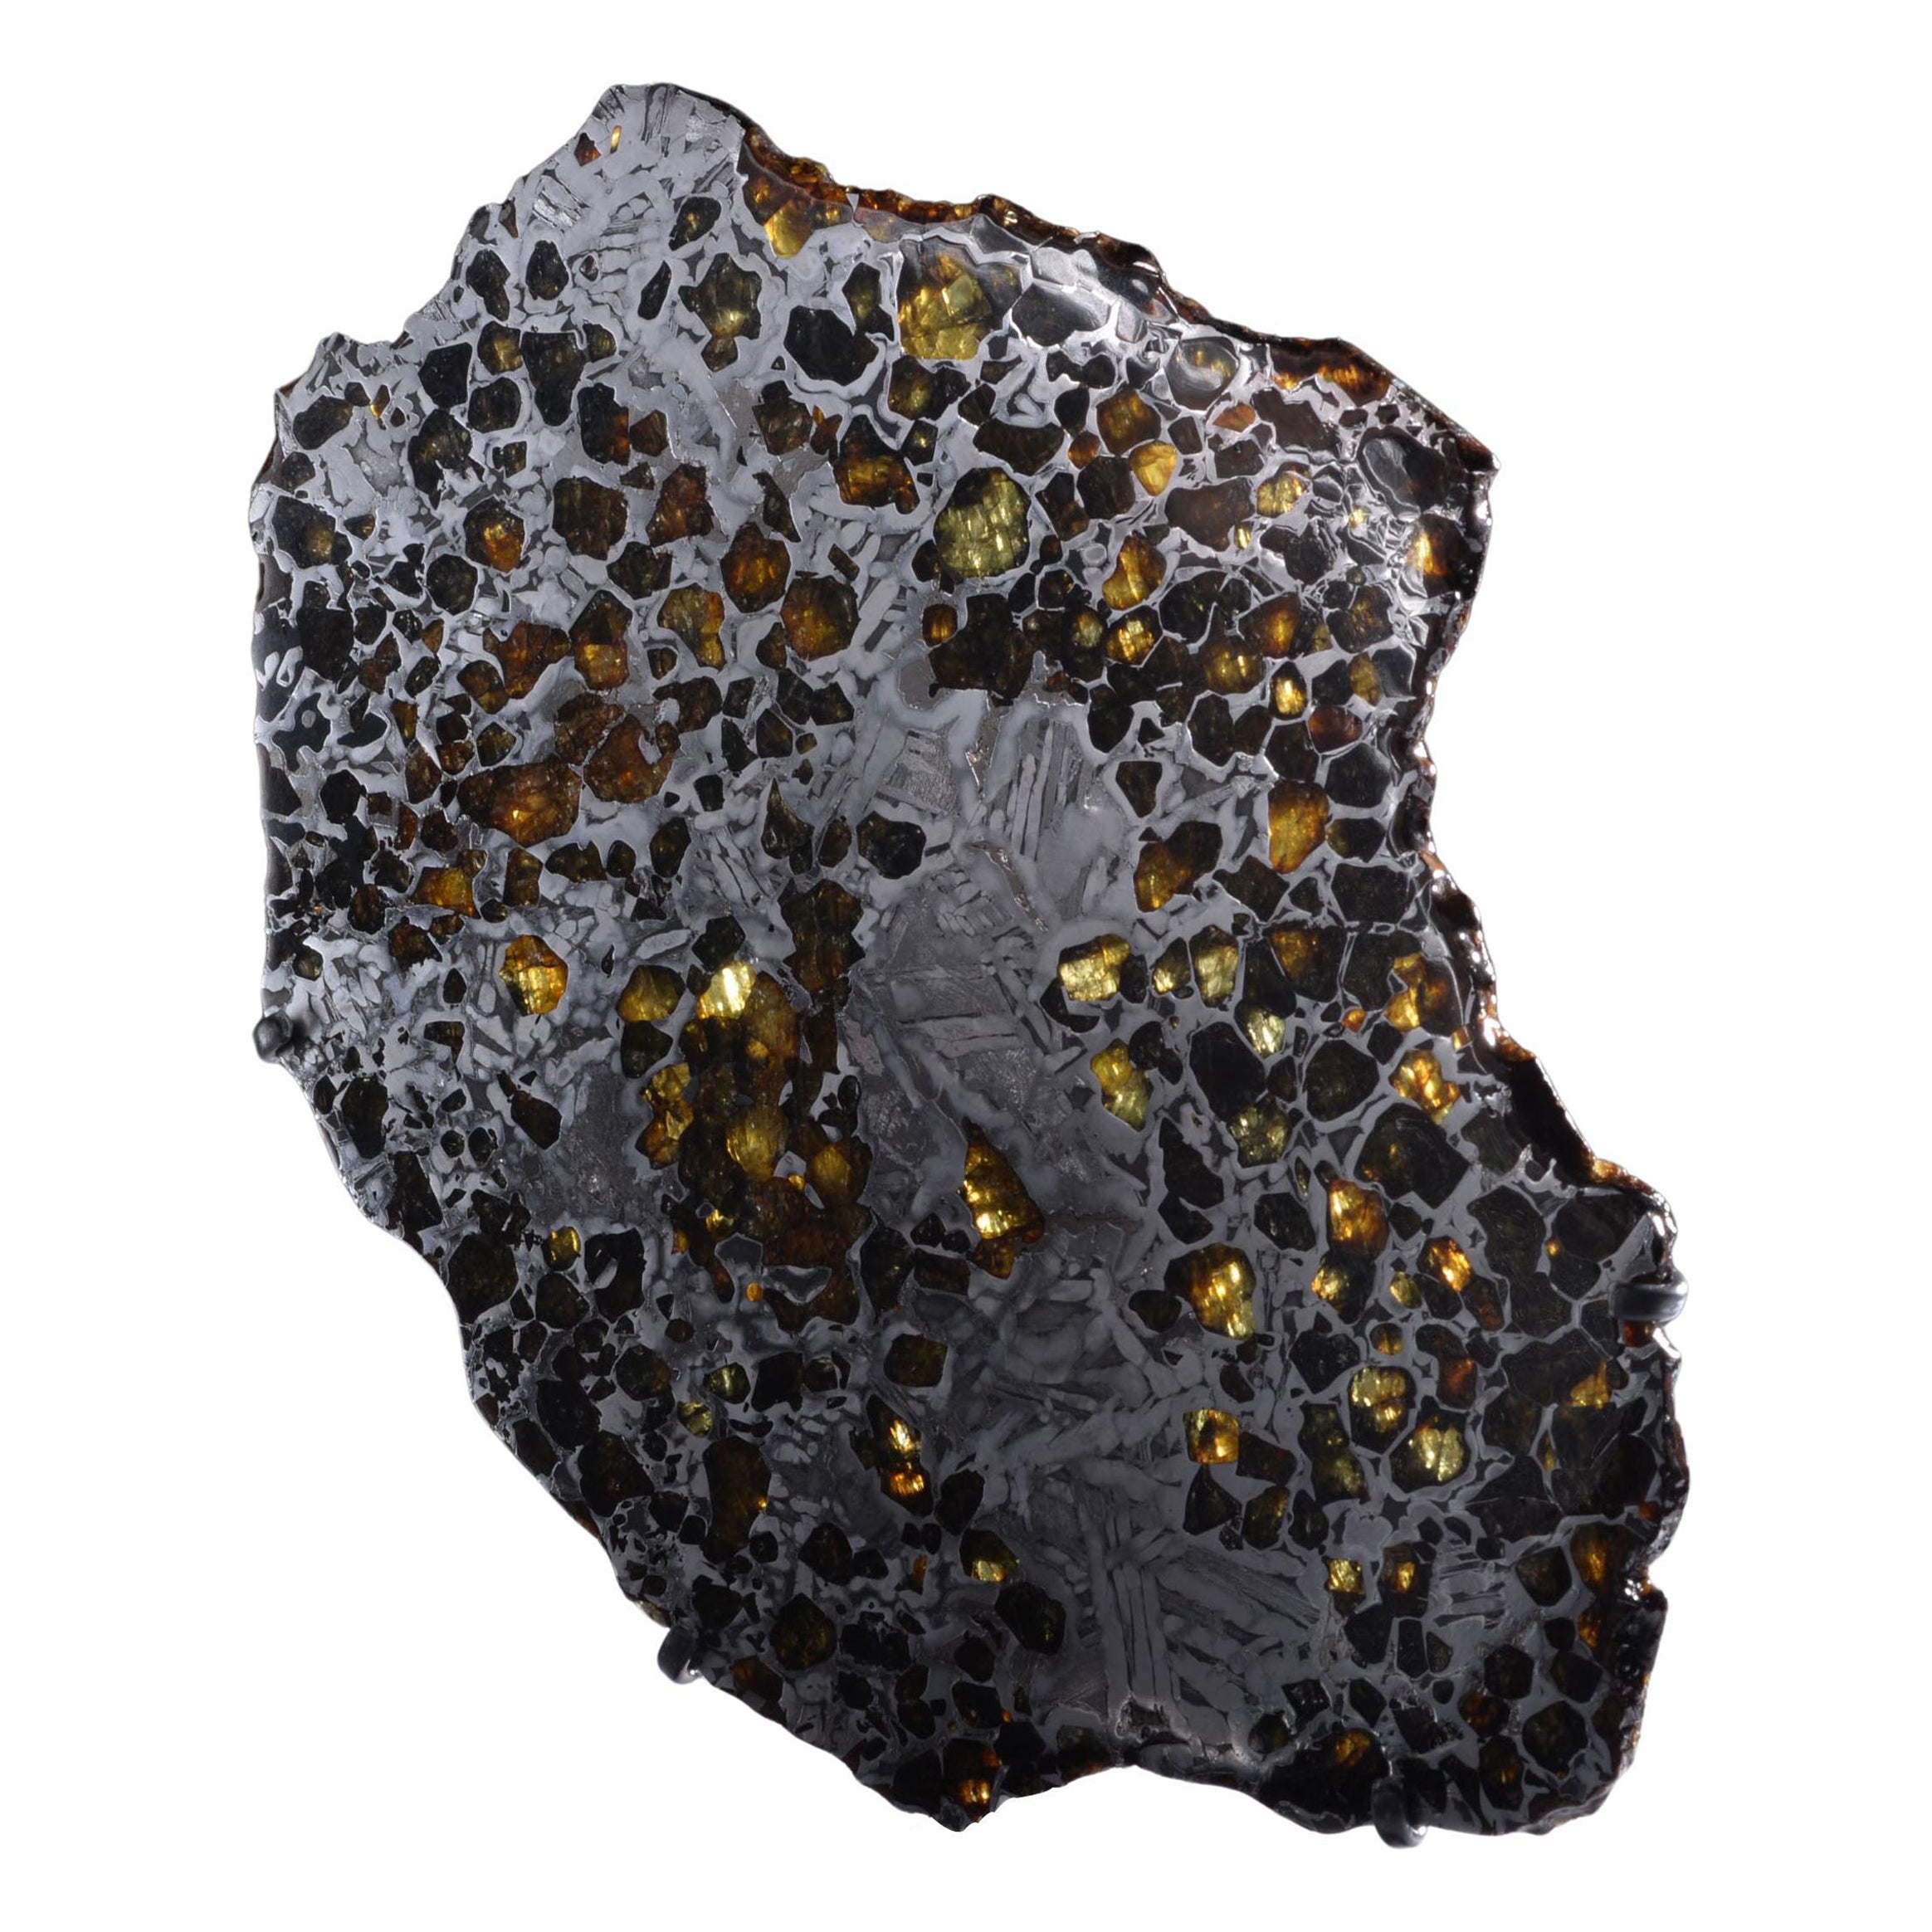 Cross Section of the Seymchan Meteorite